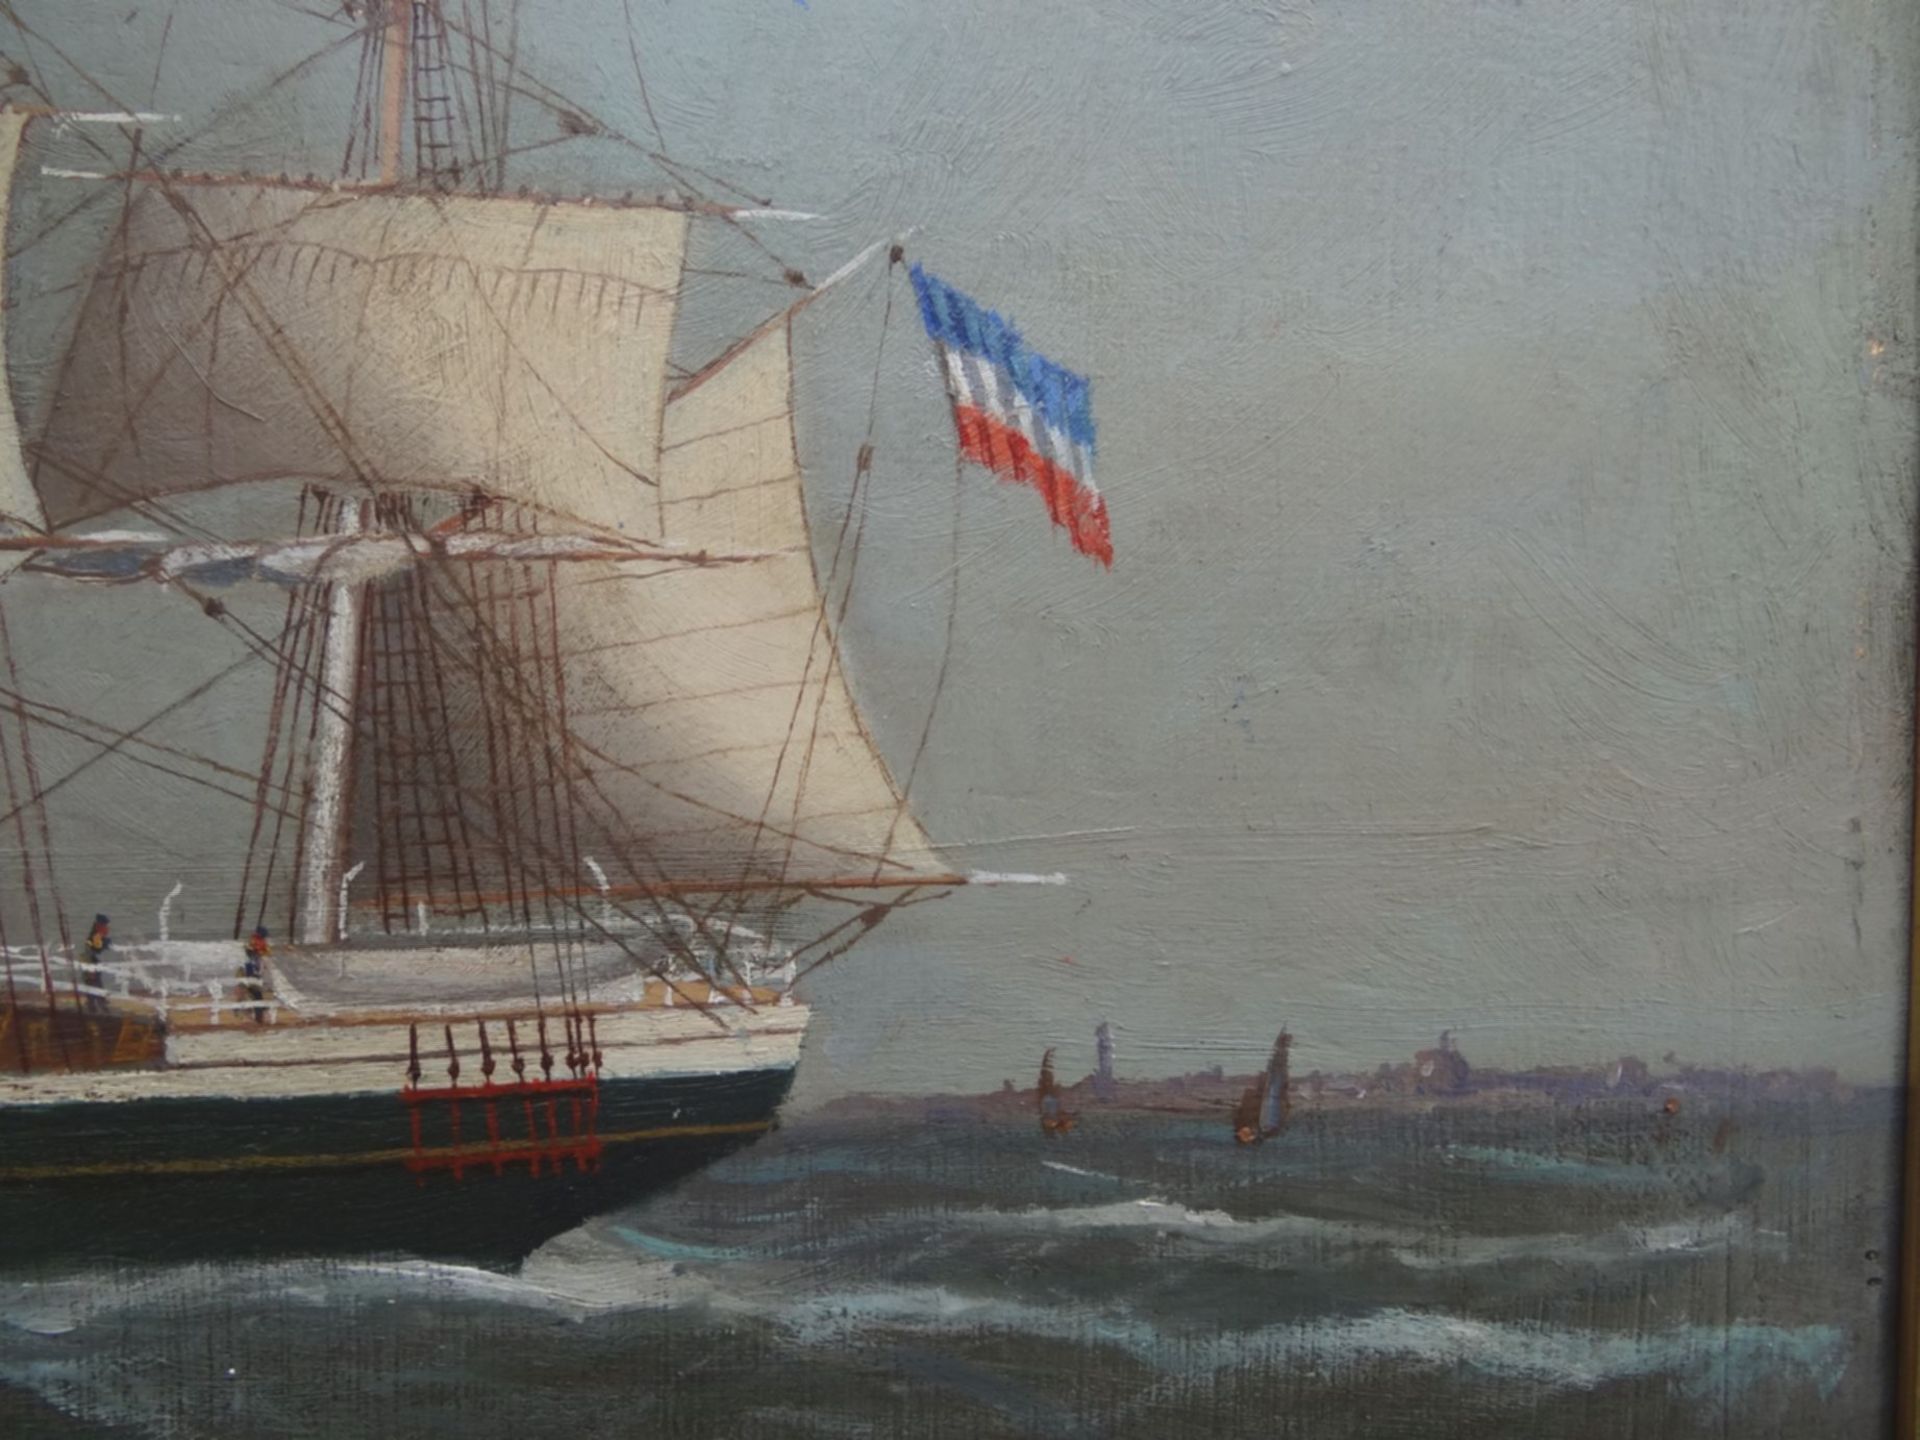 anonymes Kapitänsbild, dat. 1892, Öl/Holz, gerahmt, unten rechts in rot beschriftet "Vollschiff - Bild 3 aus 9